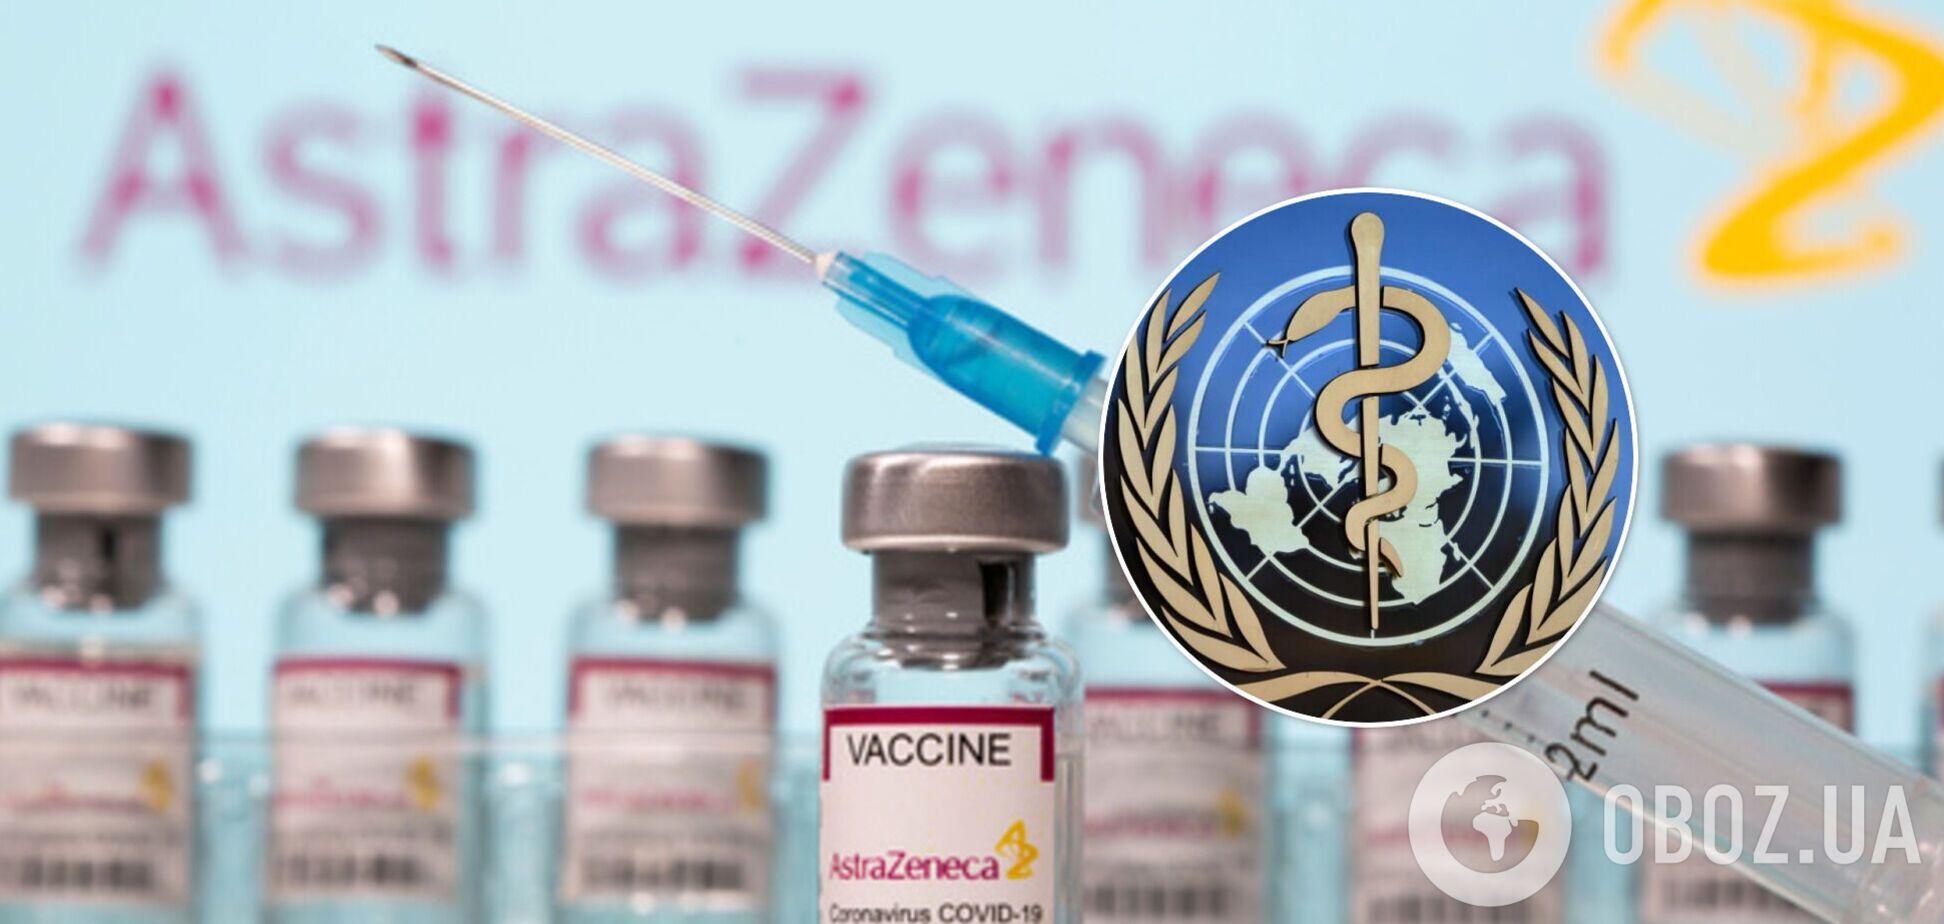 ВООЗ закликала продовжити вакцинацію препаратом AstraZeneca